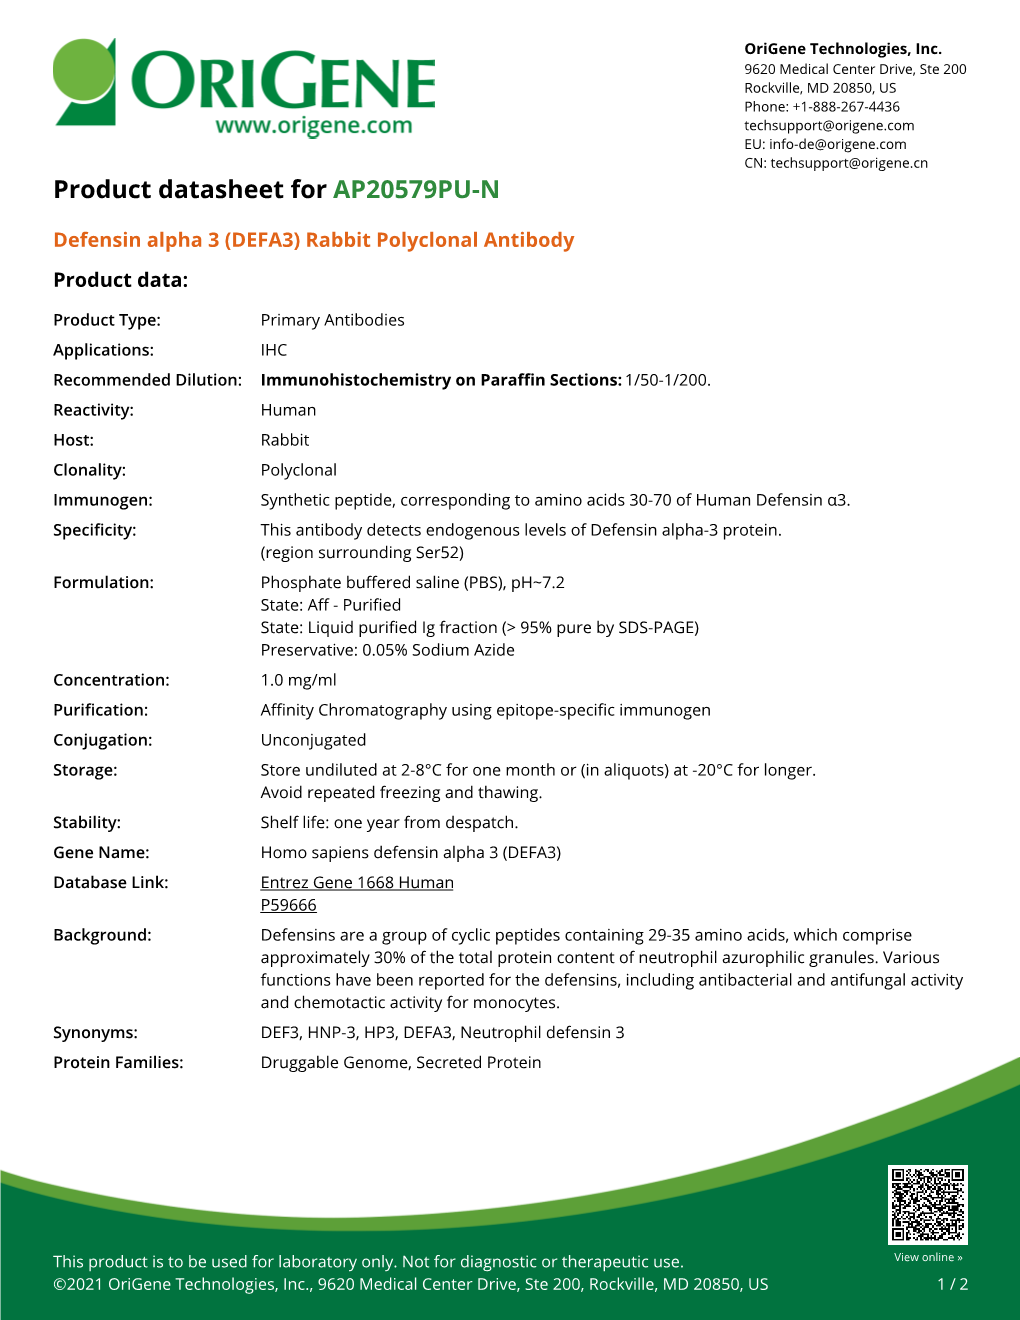 Defensin Alpha 3 (DEFA3) Rabbit Polyclonal Antibody Product Data